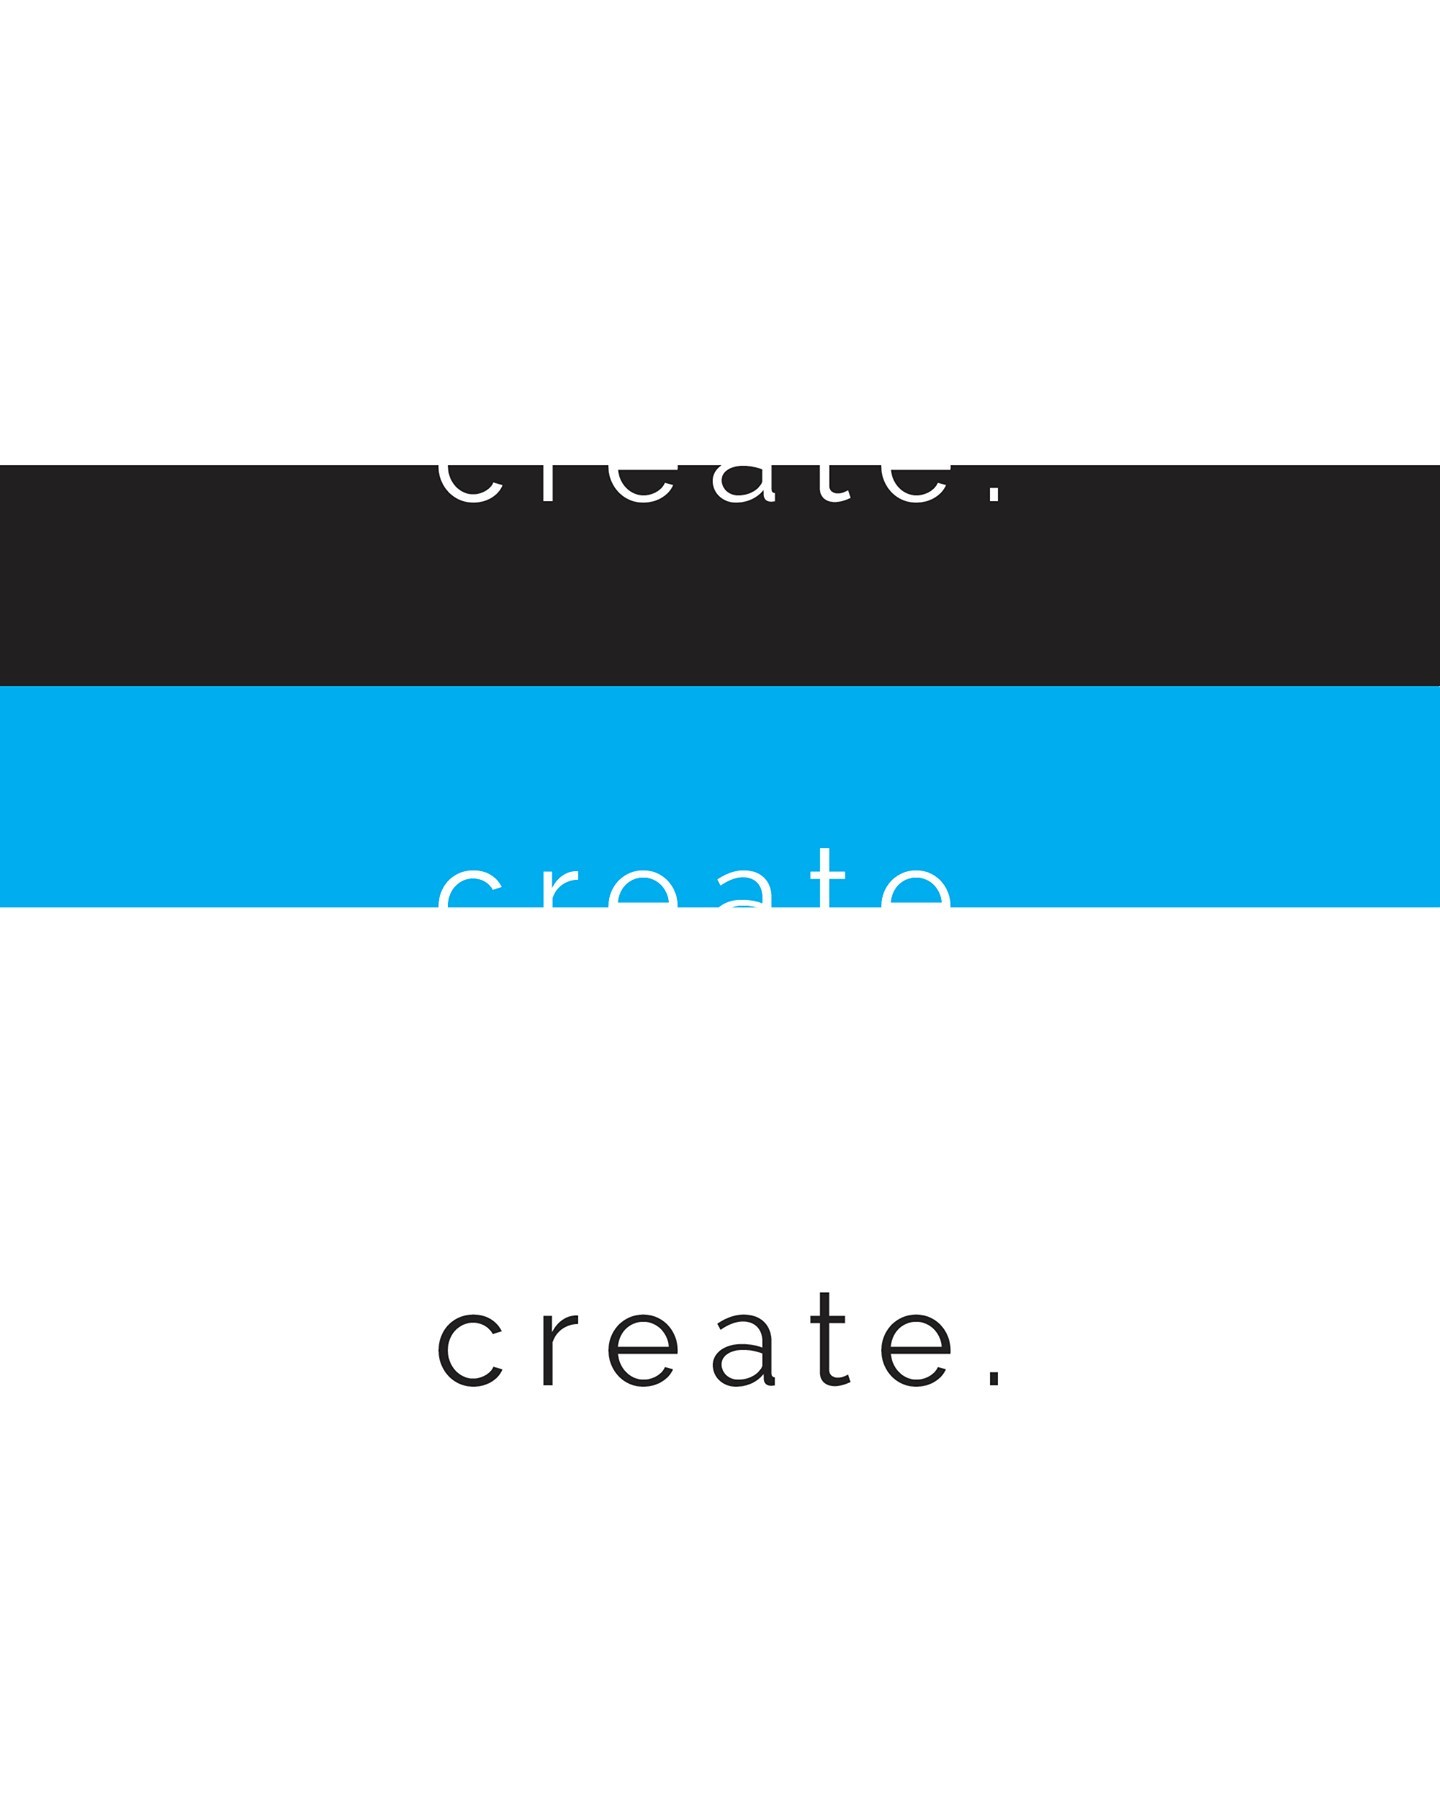 Create. Create. Create. #create #graphicdesign #design #creative #creativethinking #learn #design #creativedesign #marketing